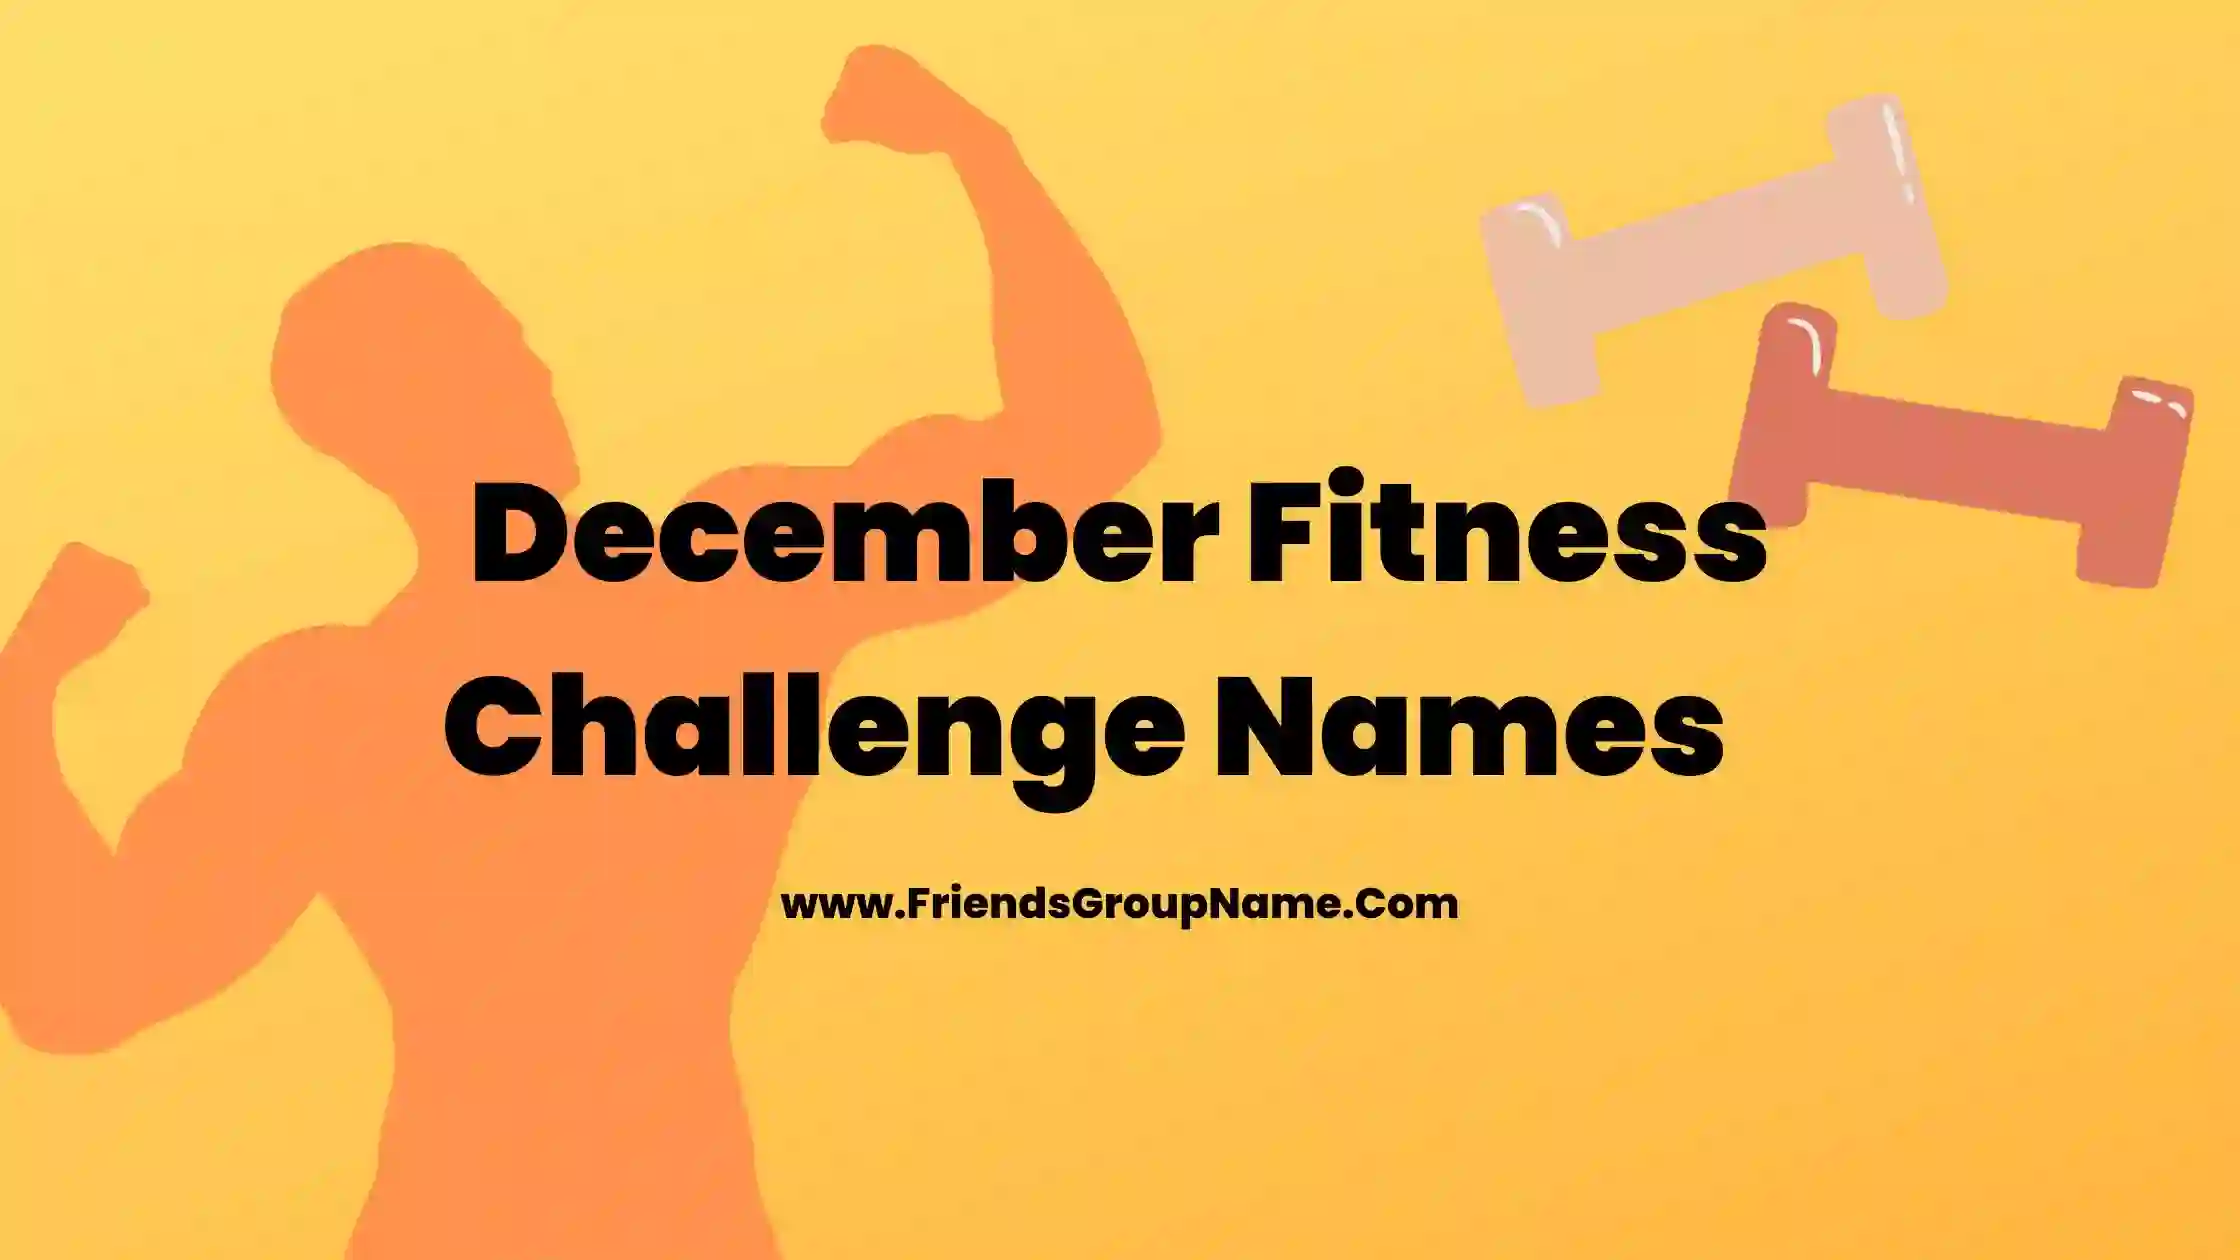 December Fitness Challenge Names